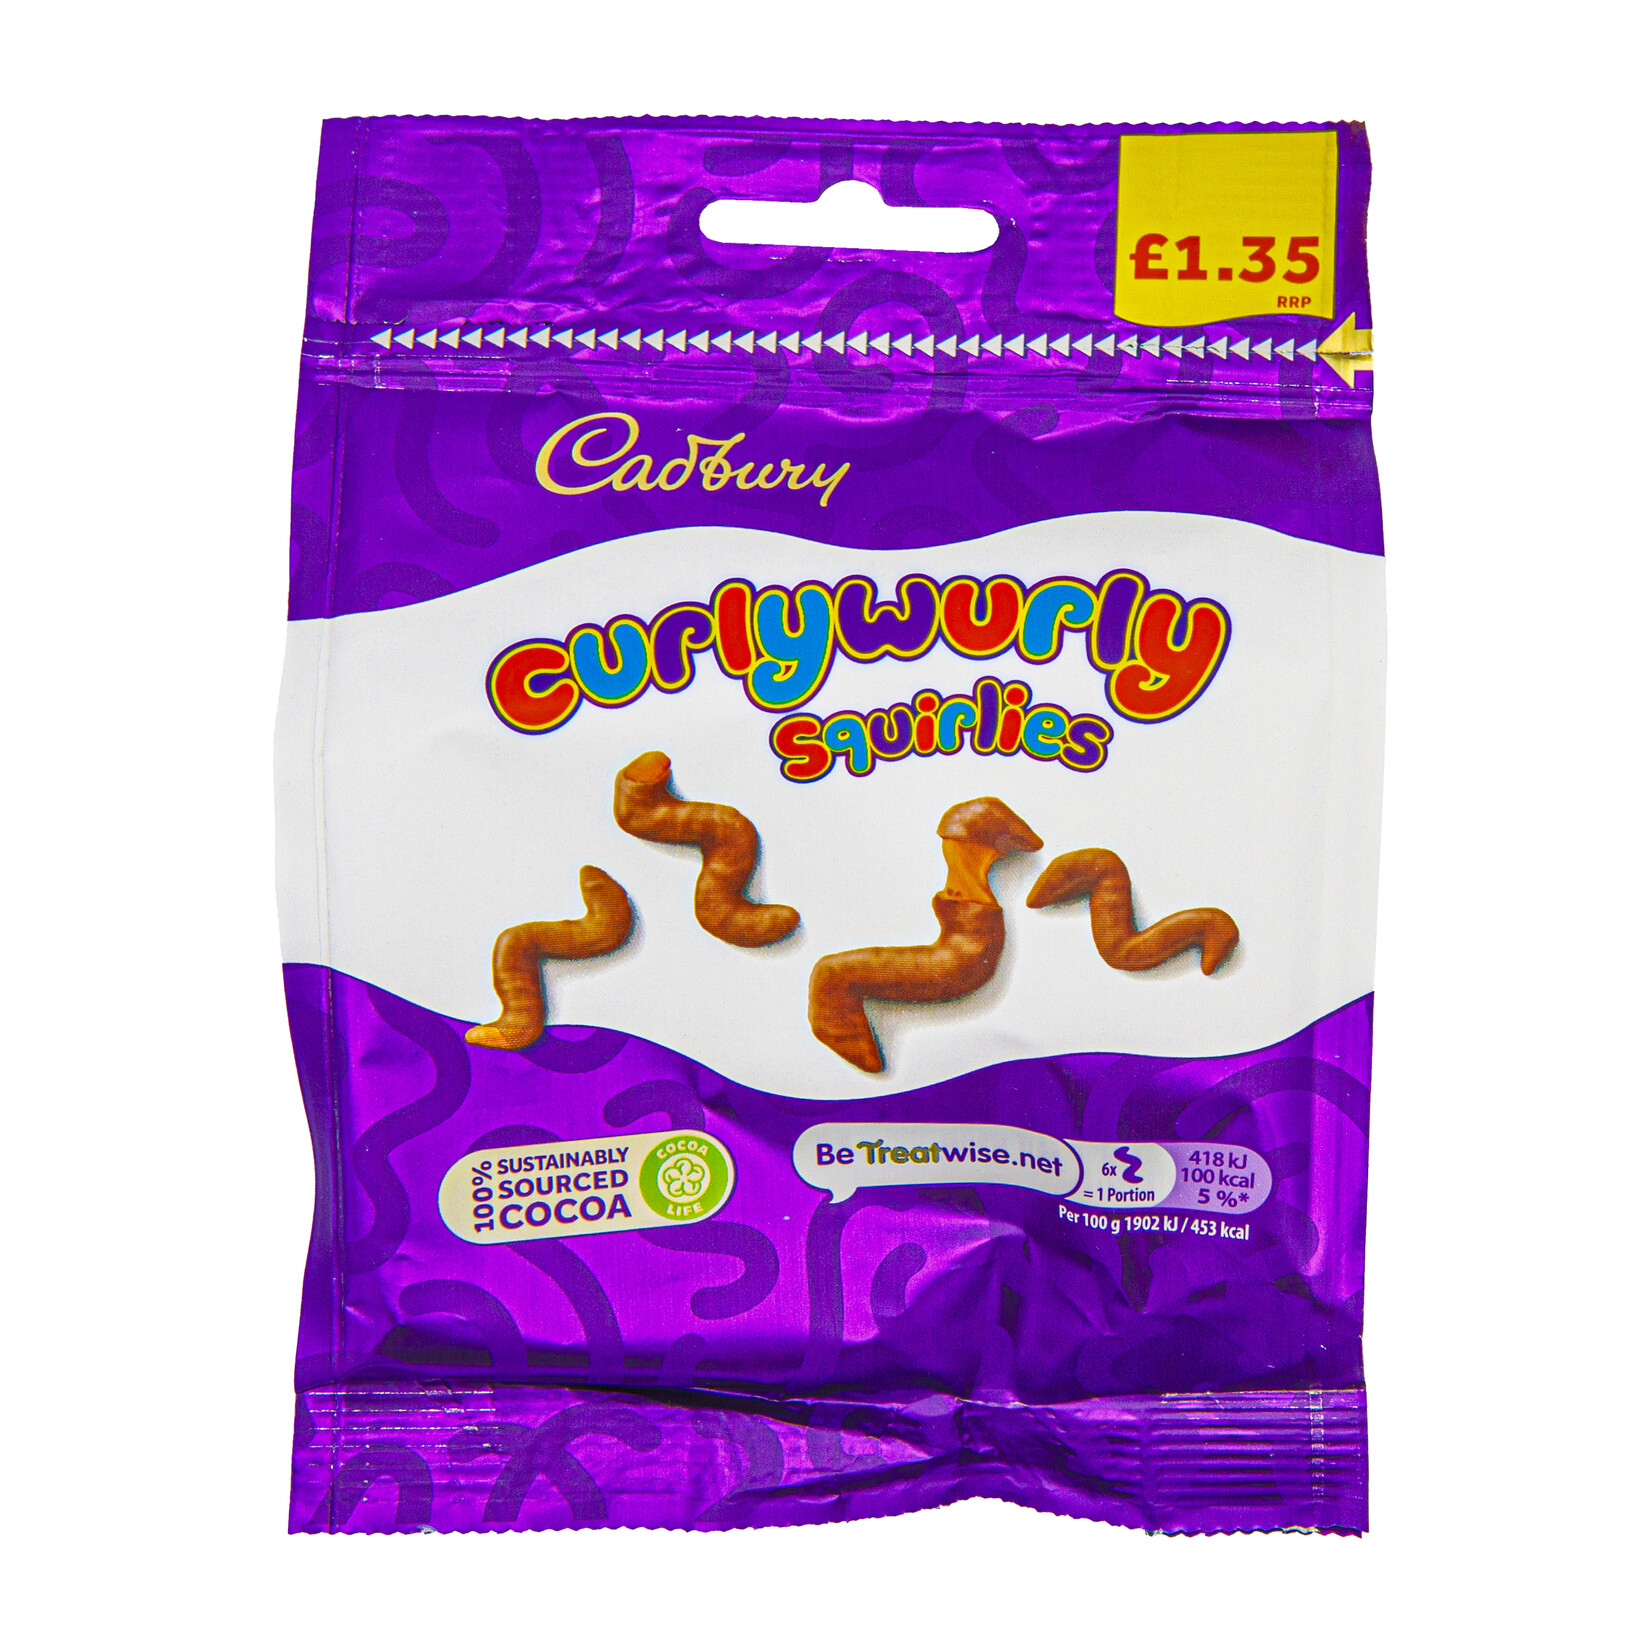 Cadbury Curly Wurly squirlies 95g